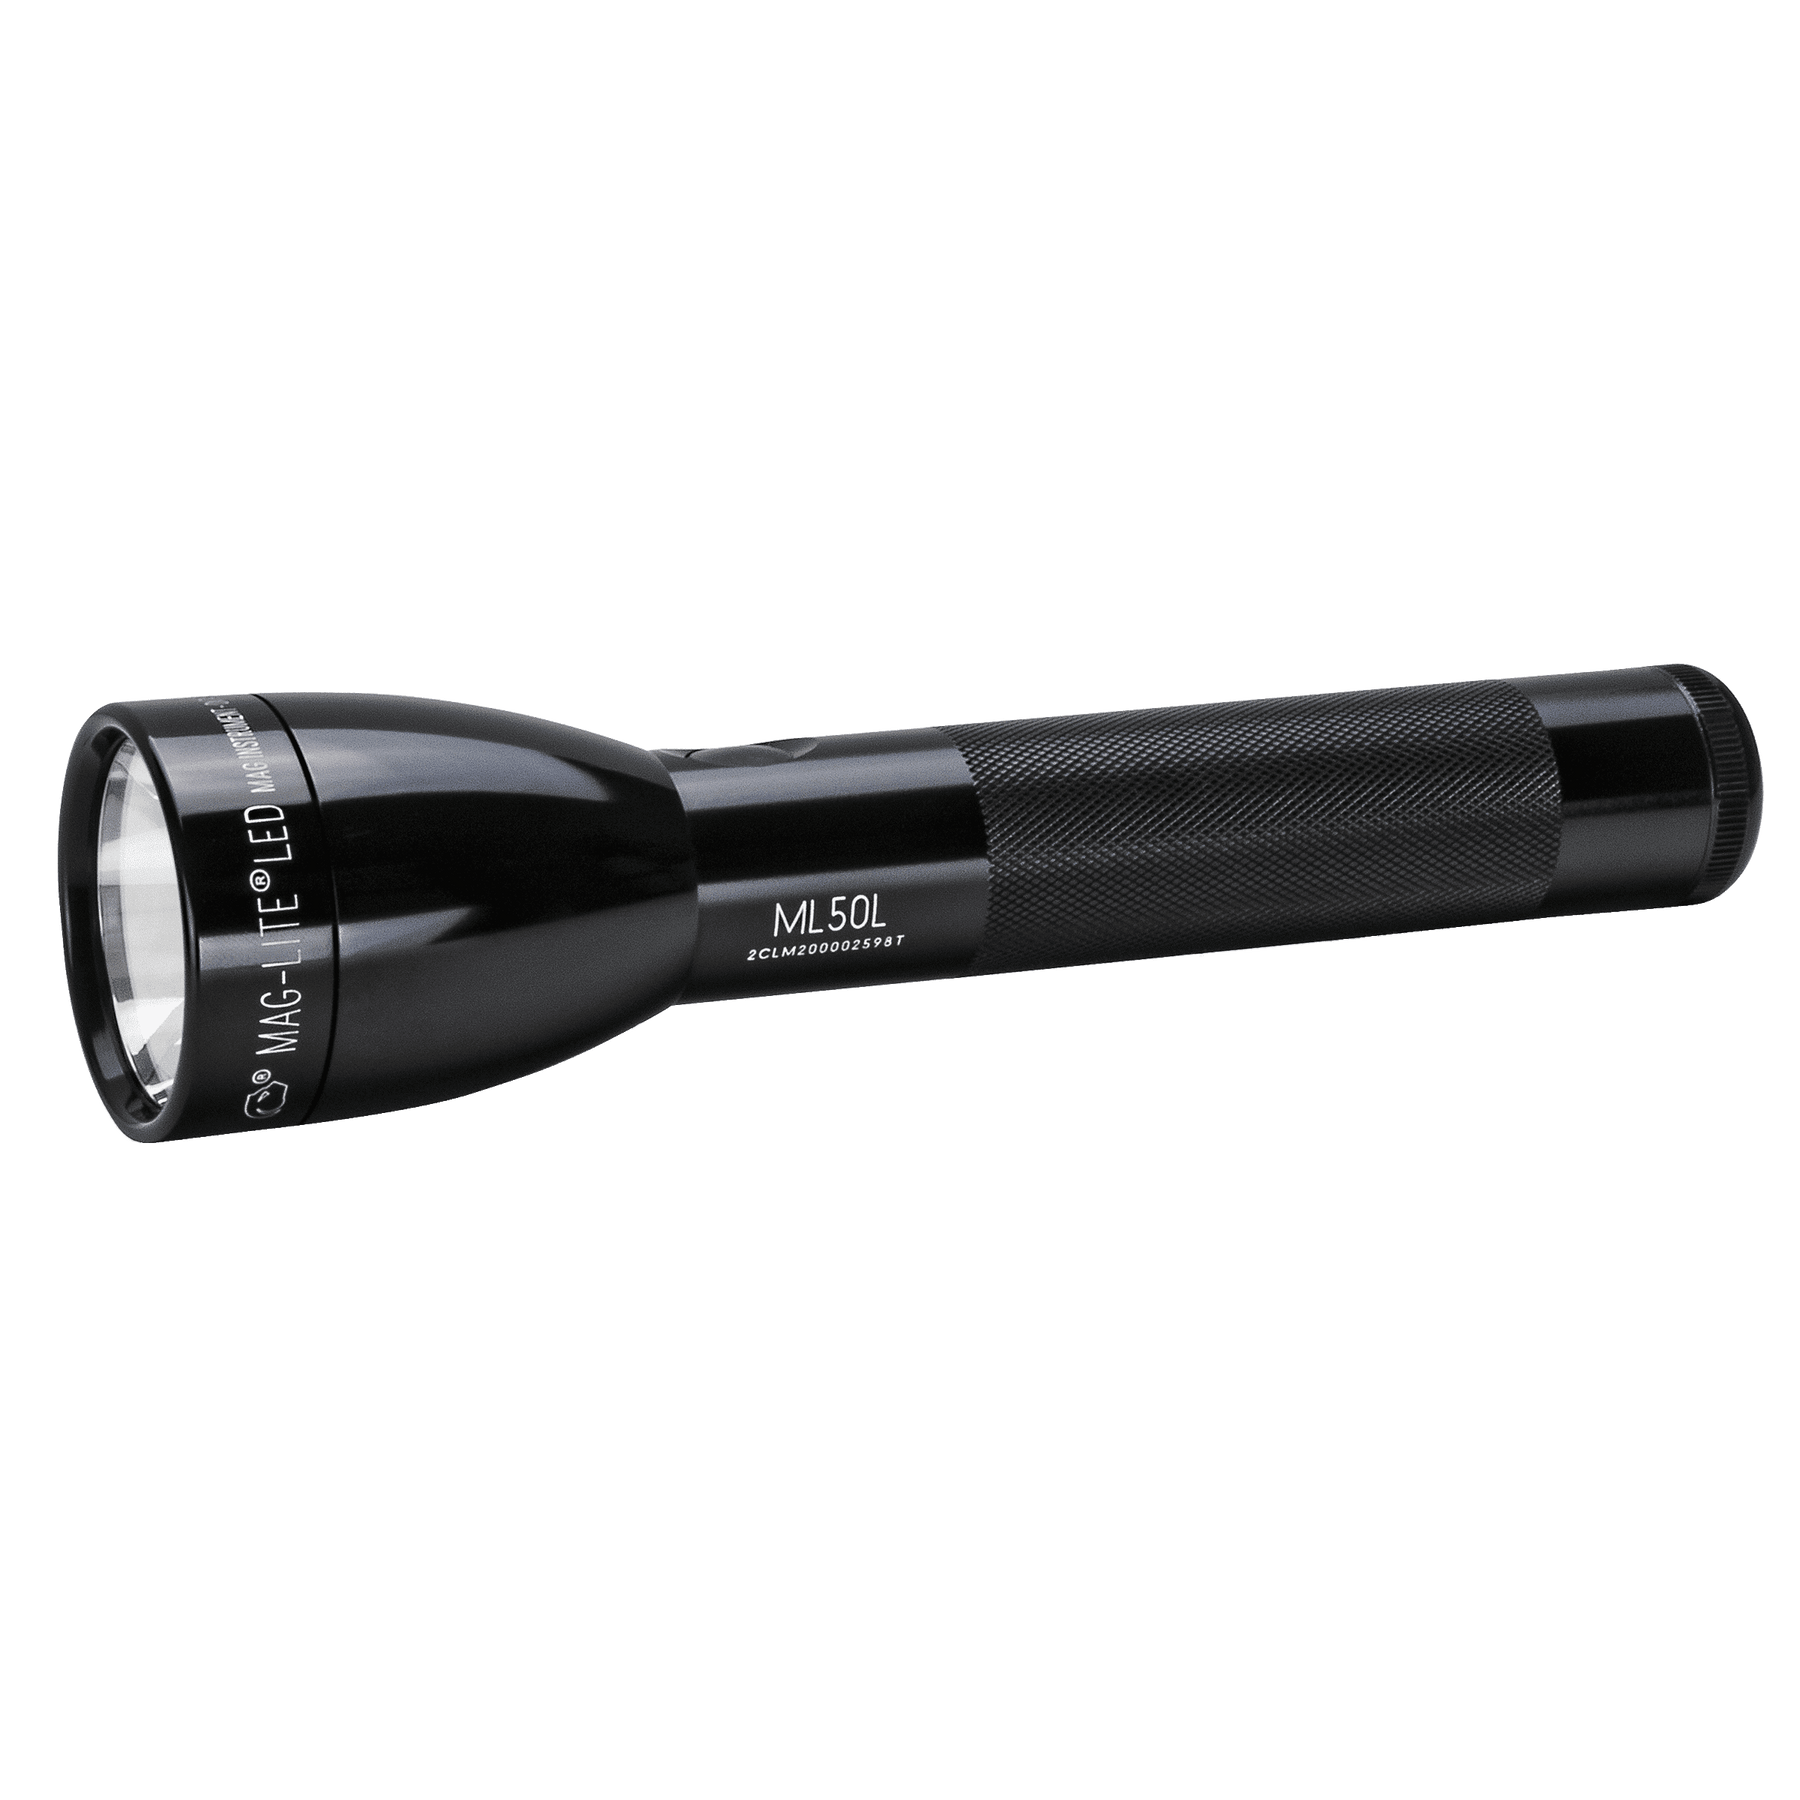 Maglite LED ML50LX™ / Gerber MP600 2 Piles